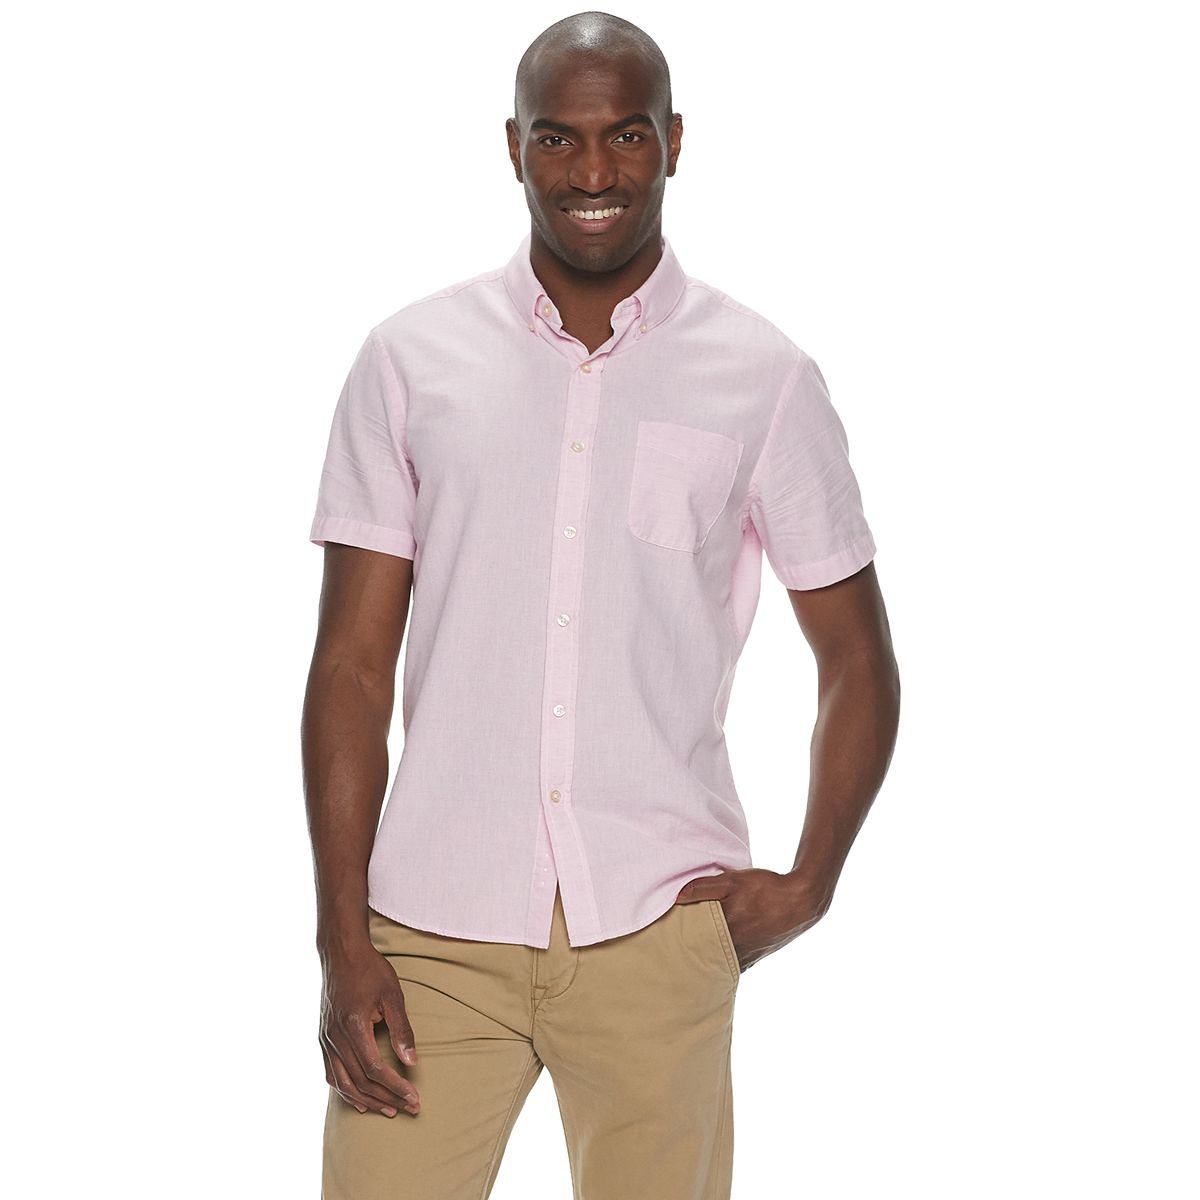 Men's Untucked Shirts: Casual Button-Down No Tuck Shirts